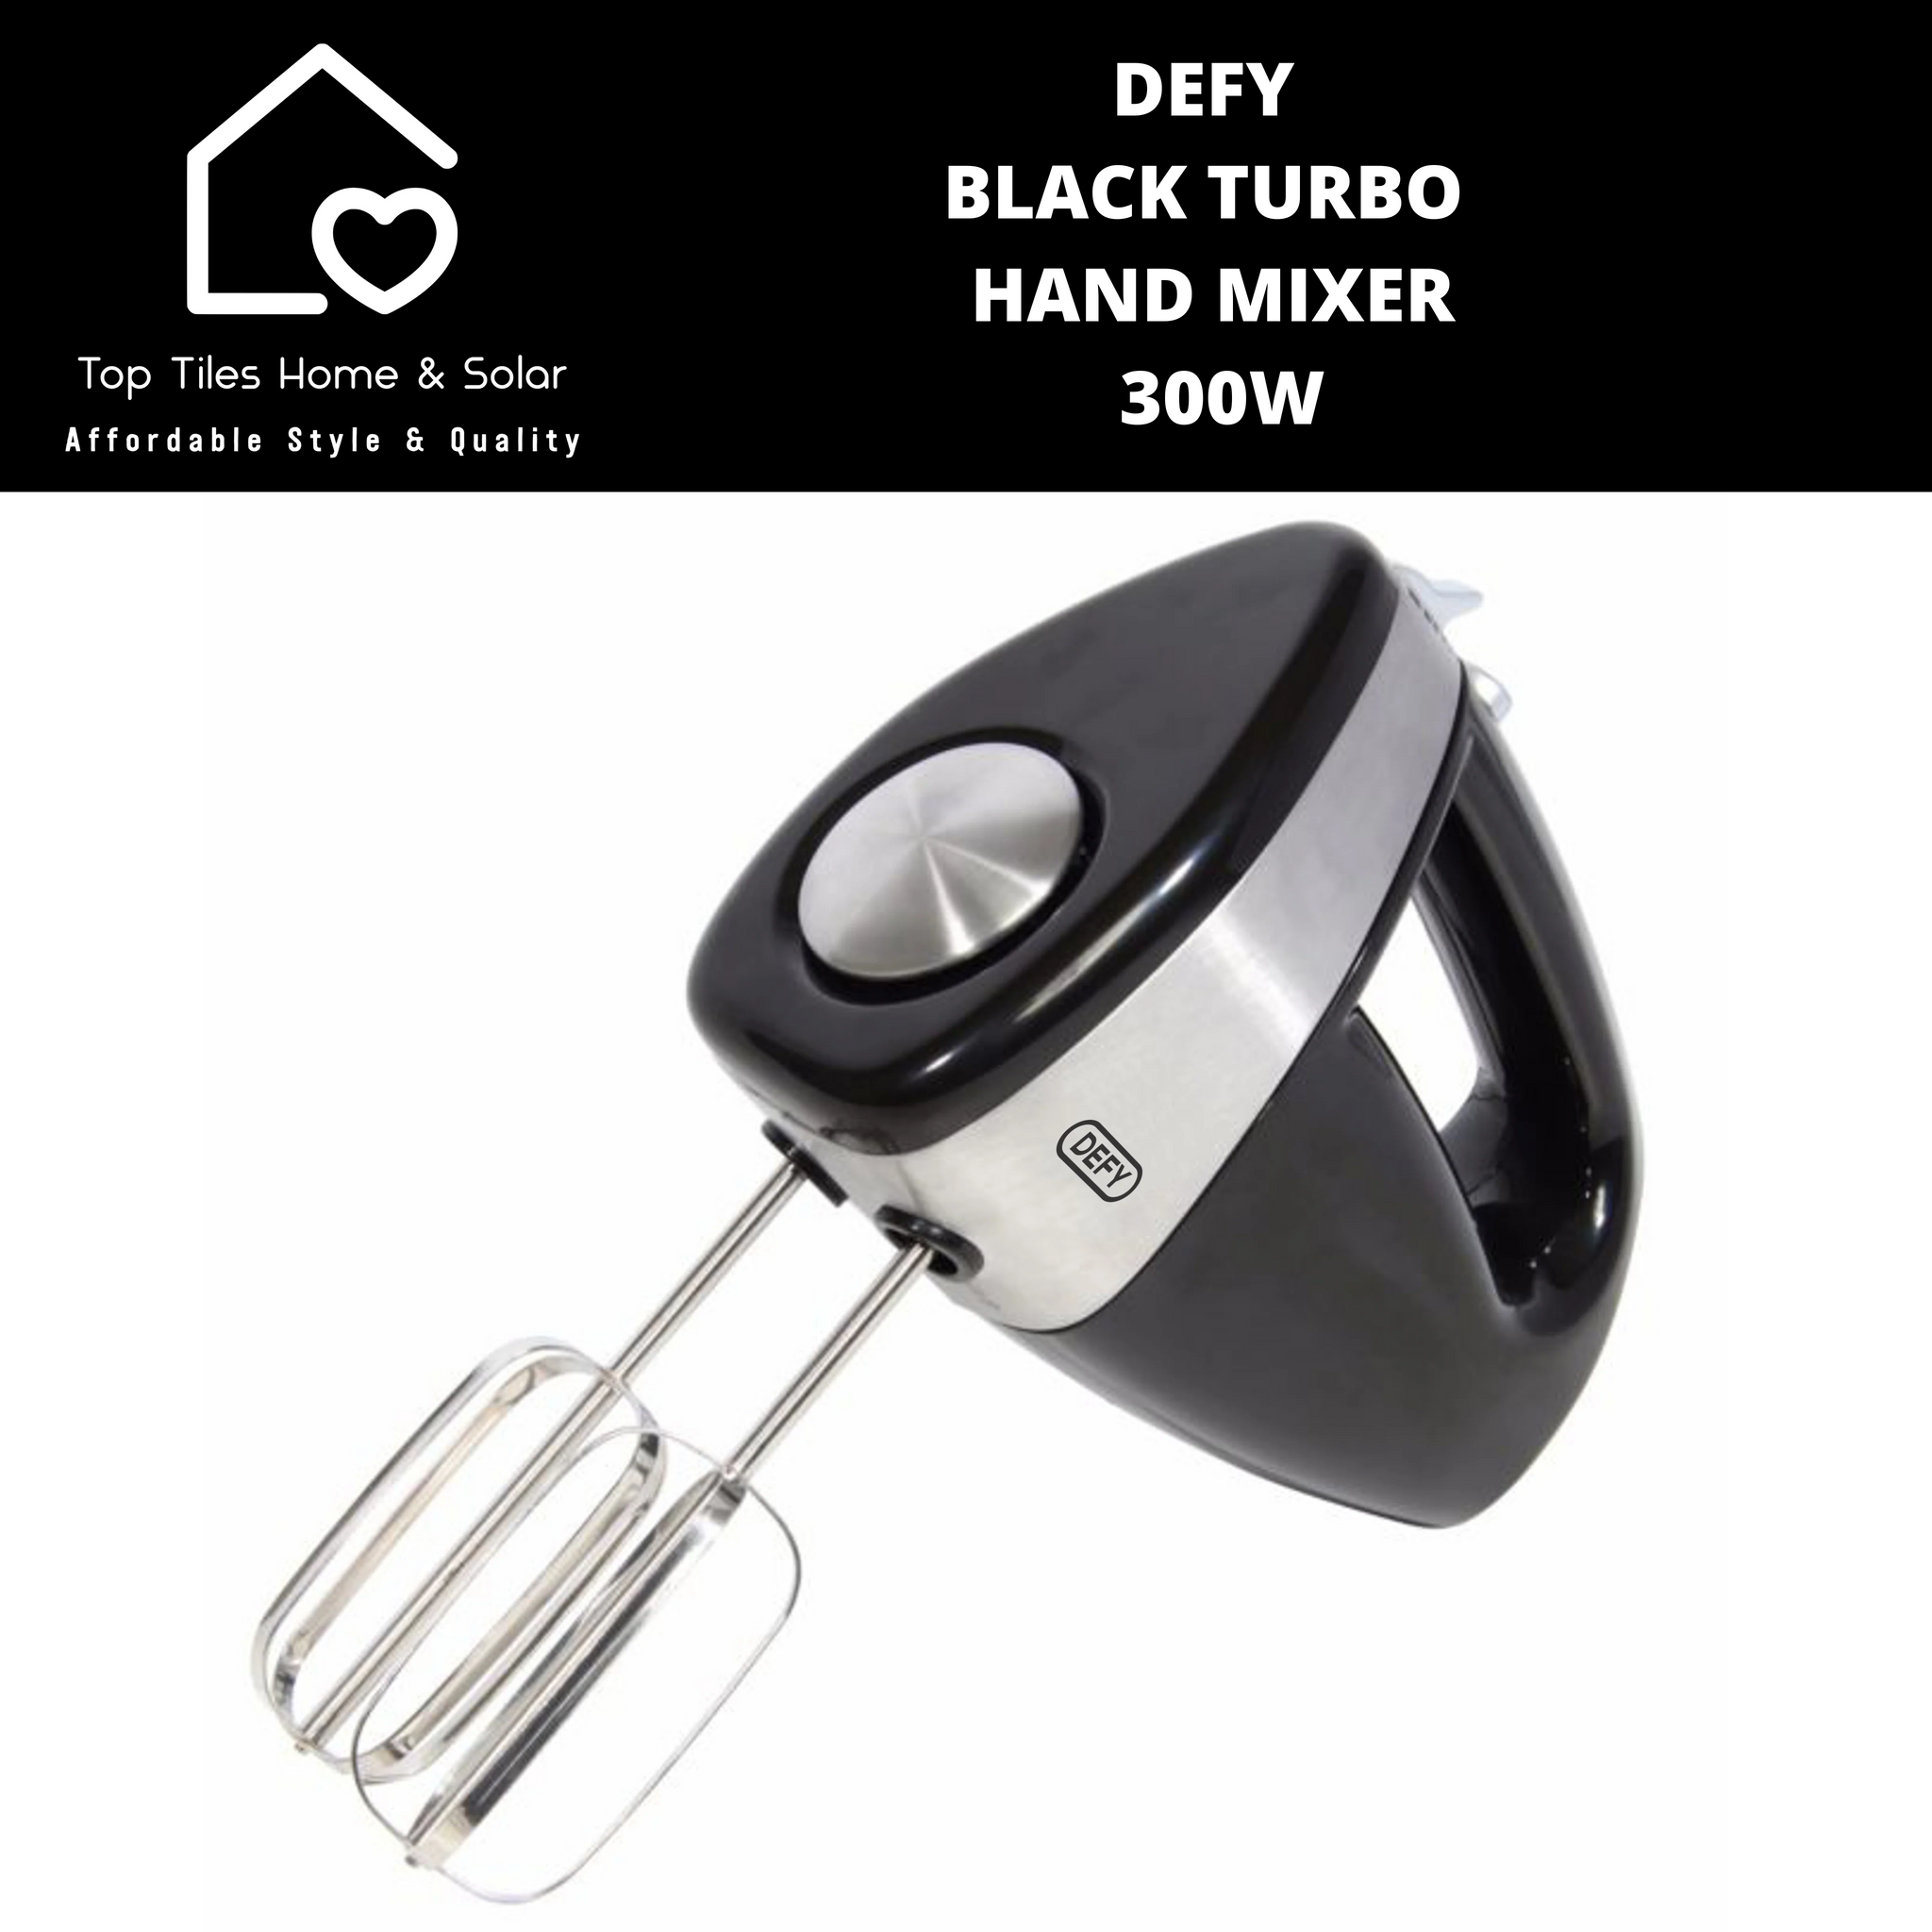 Defy Black Turbo – Tiles Mixer Solar HM5040B Top Home Hand & - 300W